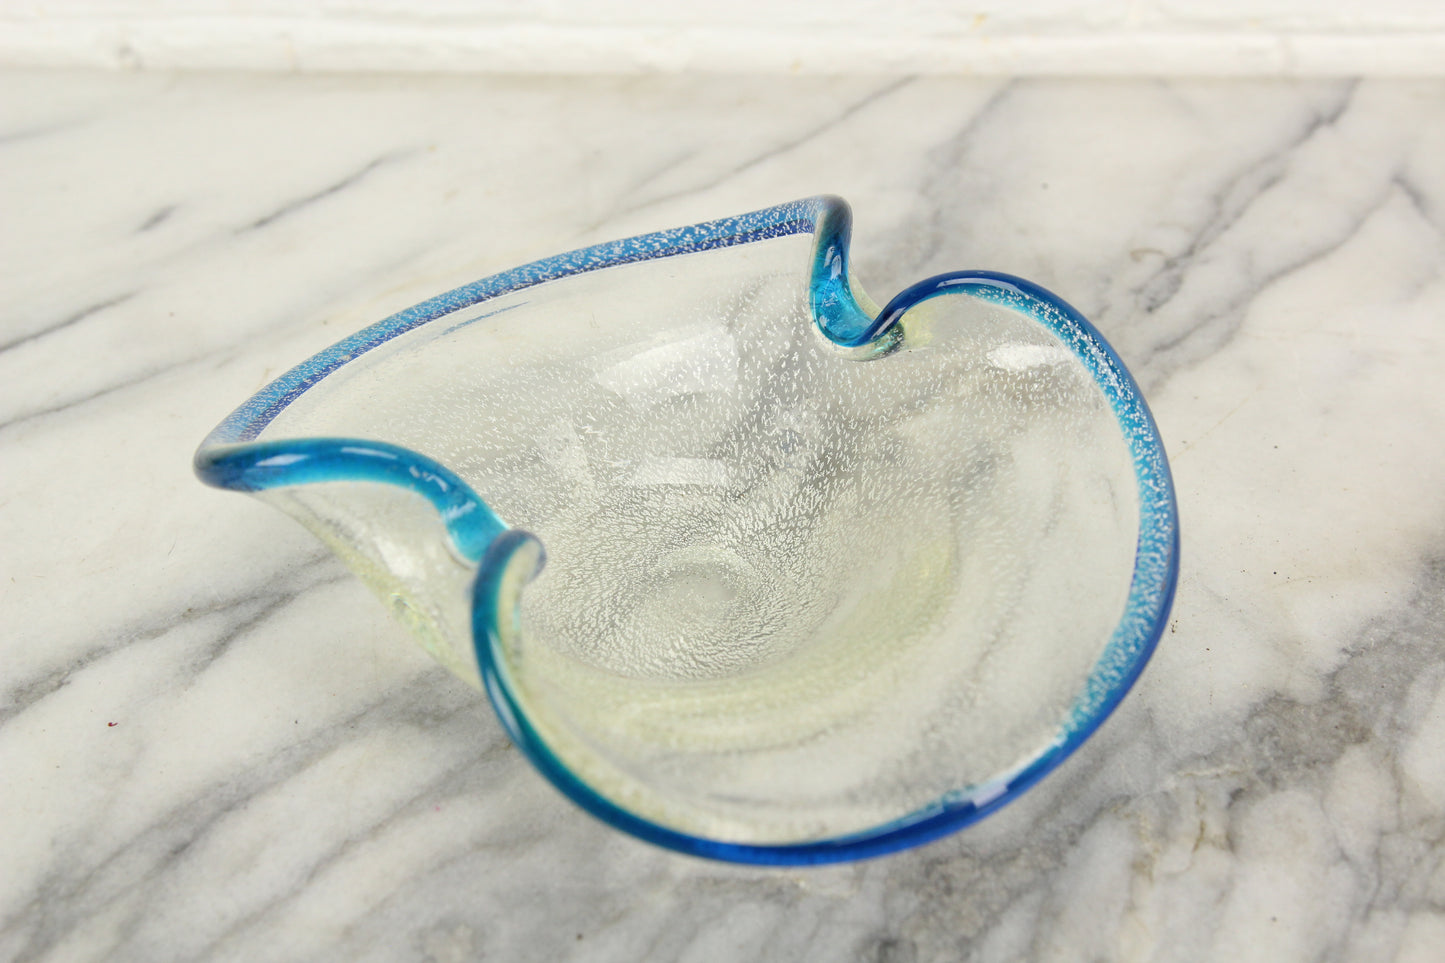 Blue Rimmed White Speckled Art Glass Bowl Dish